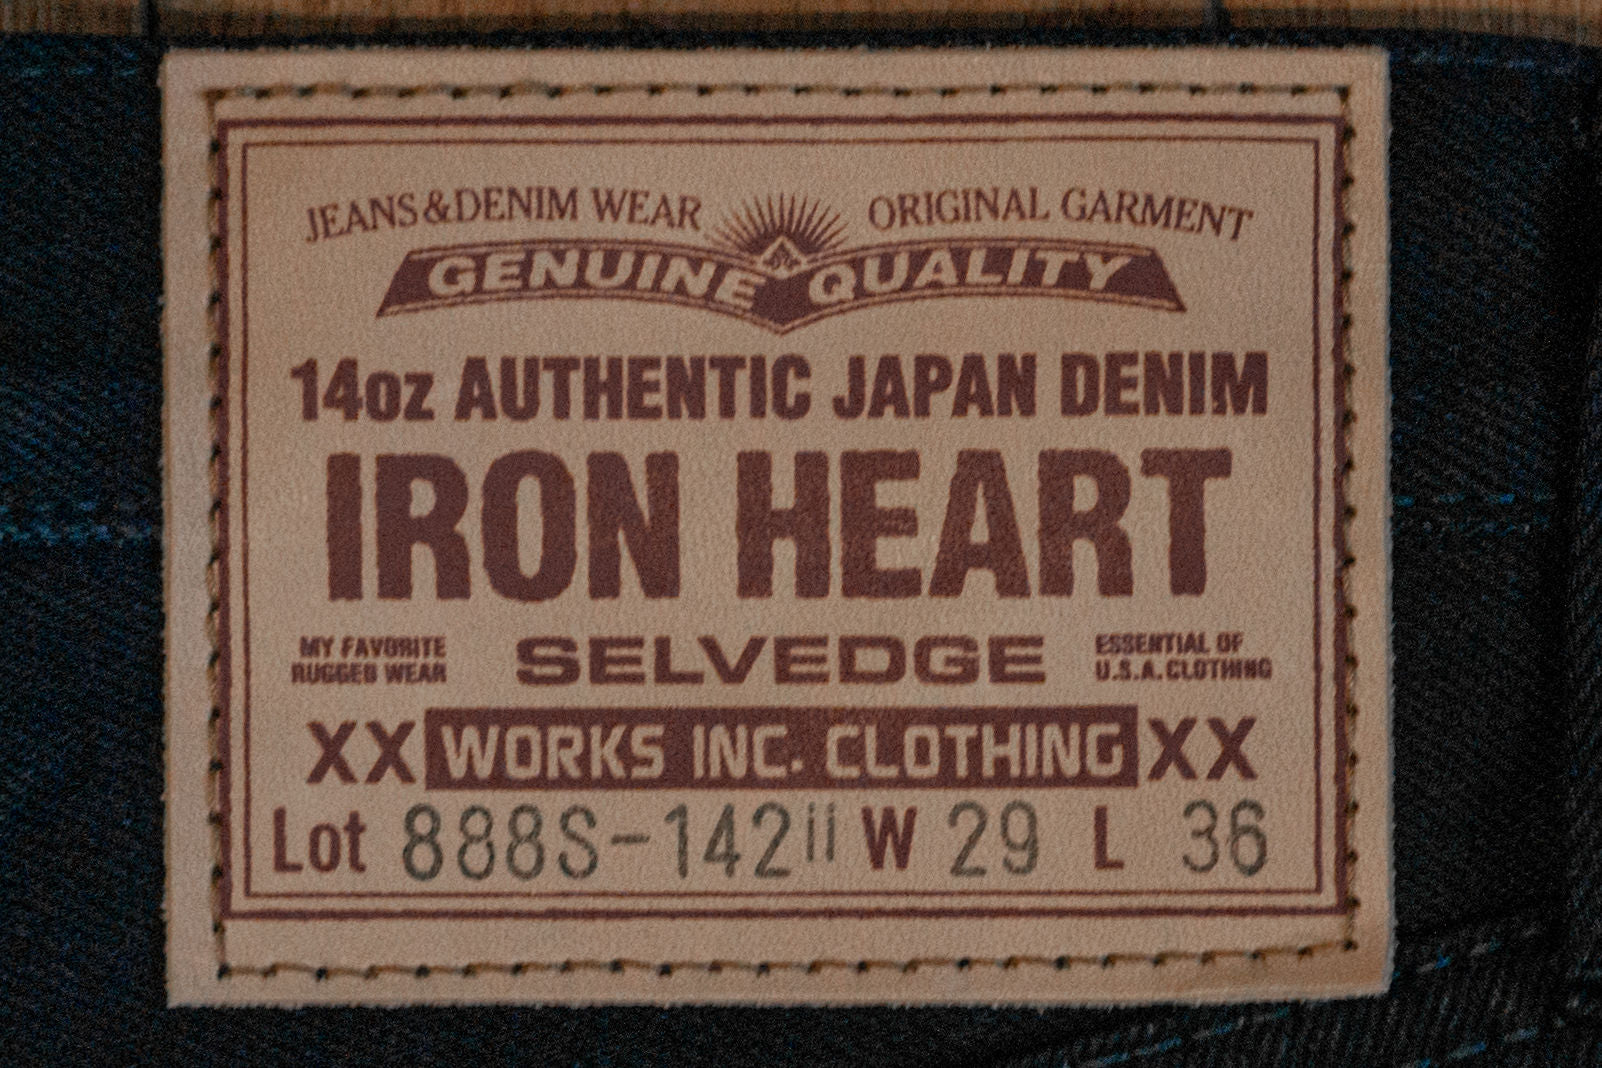 Iron Heart IH-888S-142ii 14oz Selvedge Denim Mid/High Rise Tapered Cut Jeans - Indigo/Indigo